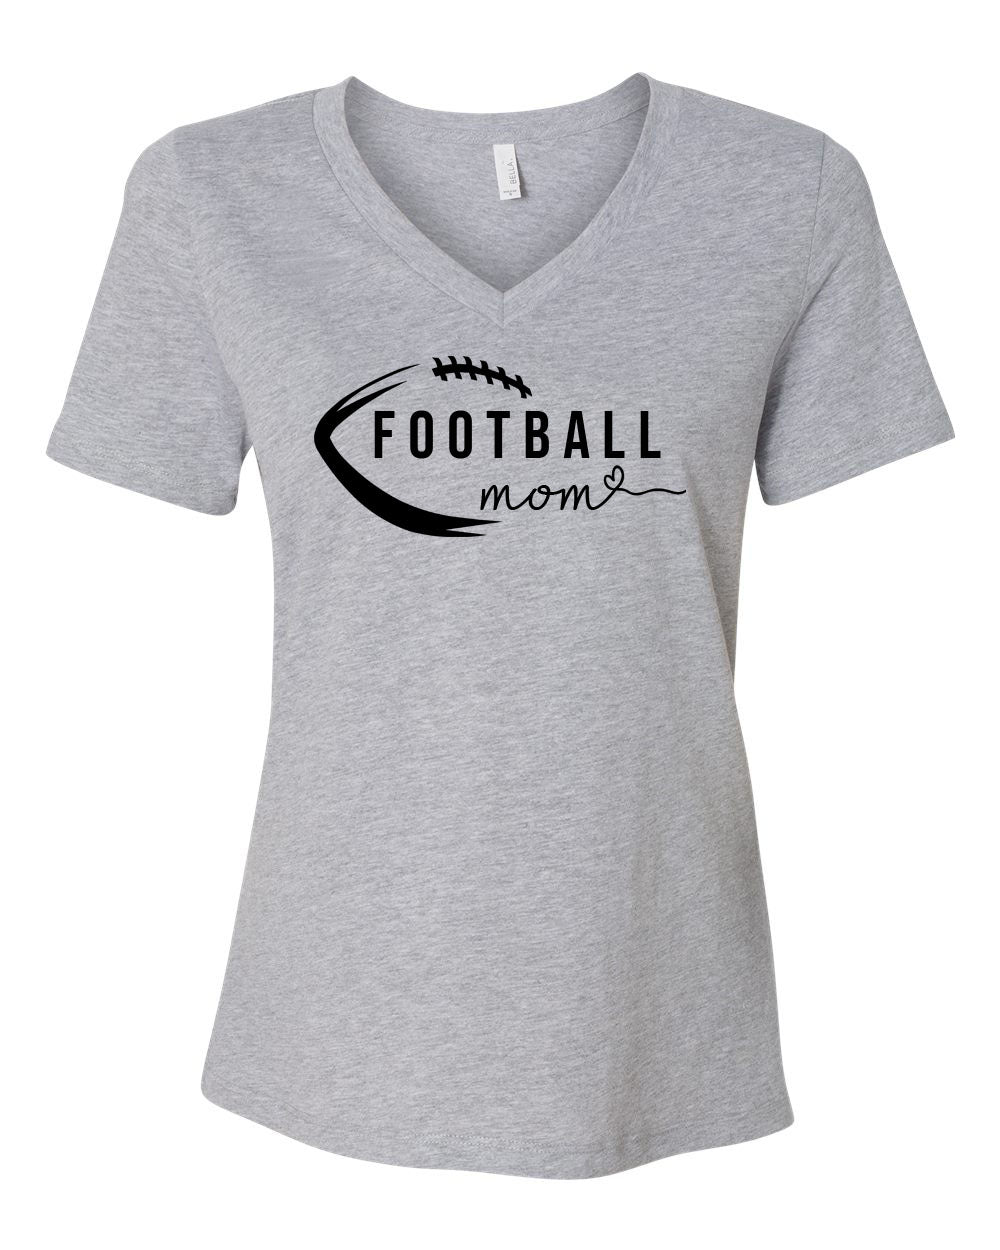 High Point Football Design 5 V-neck T-Shirt